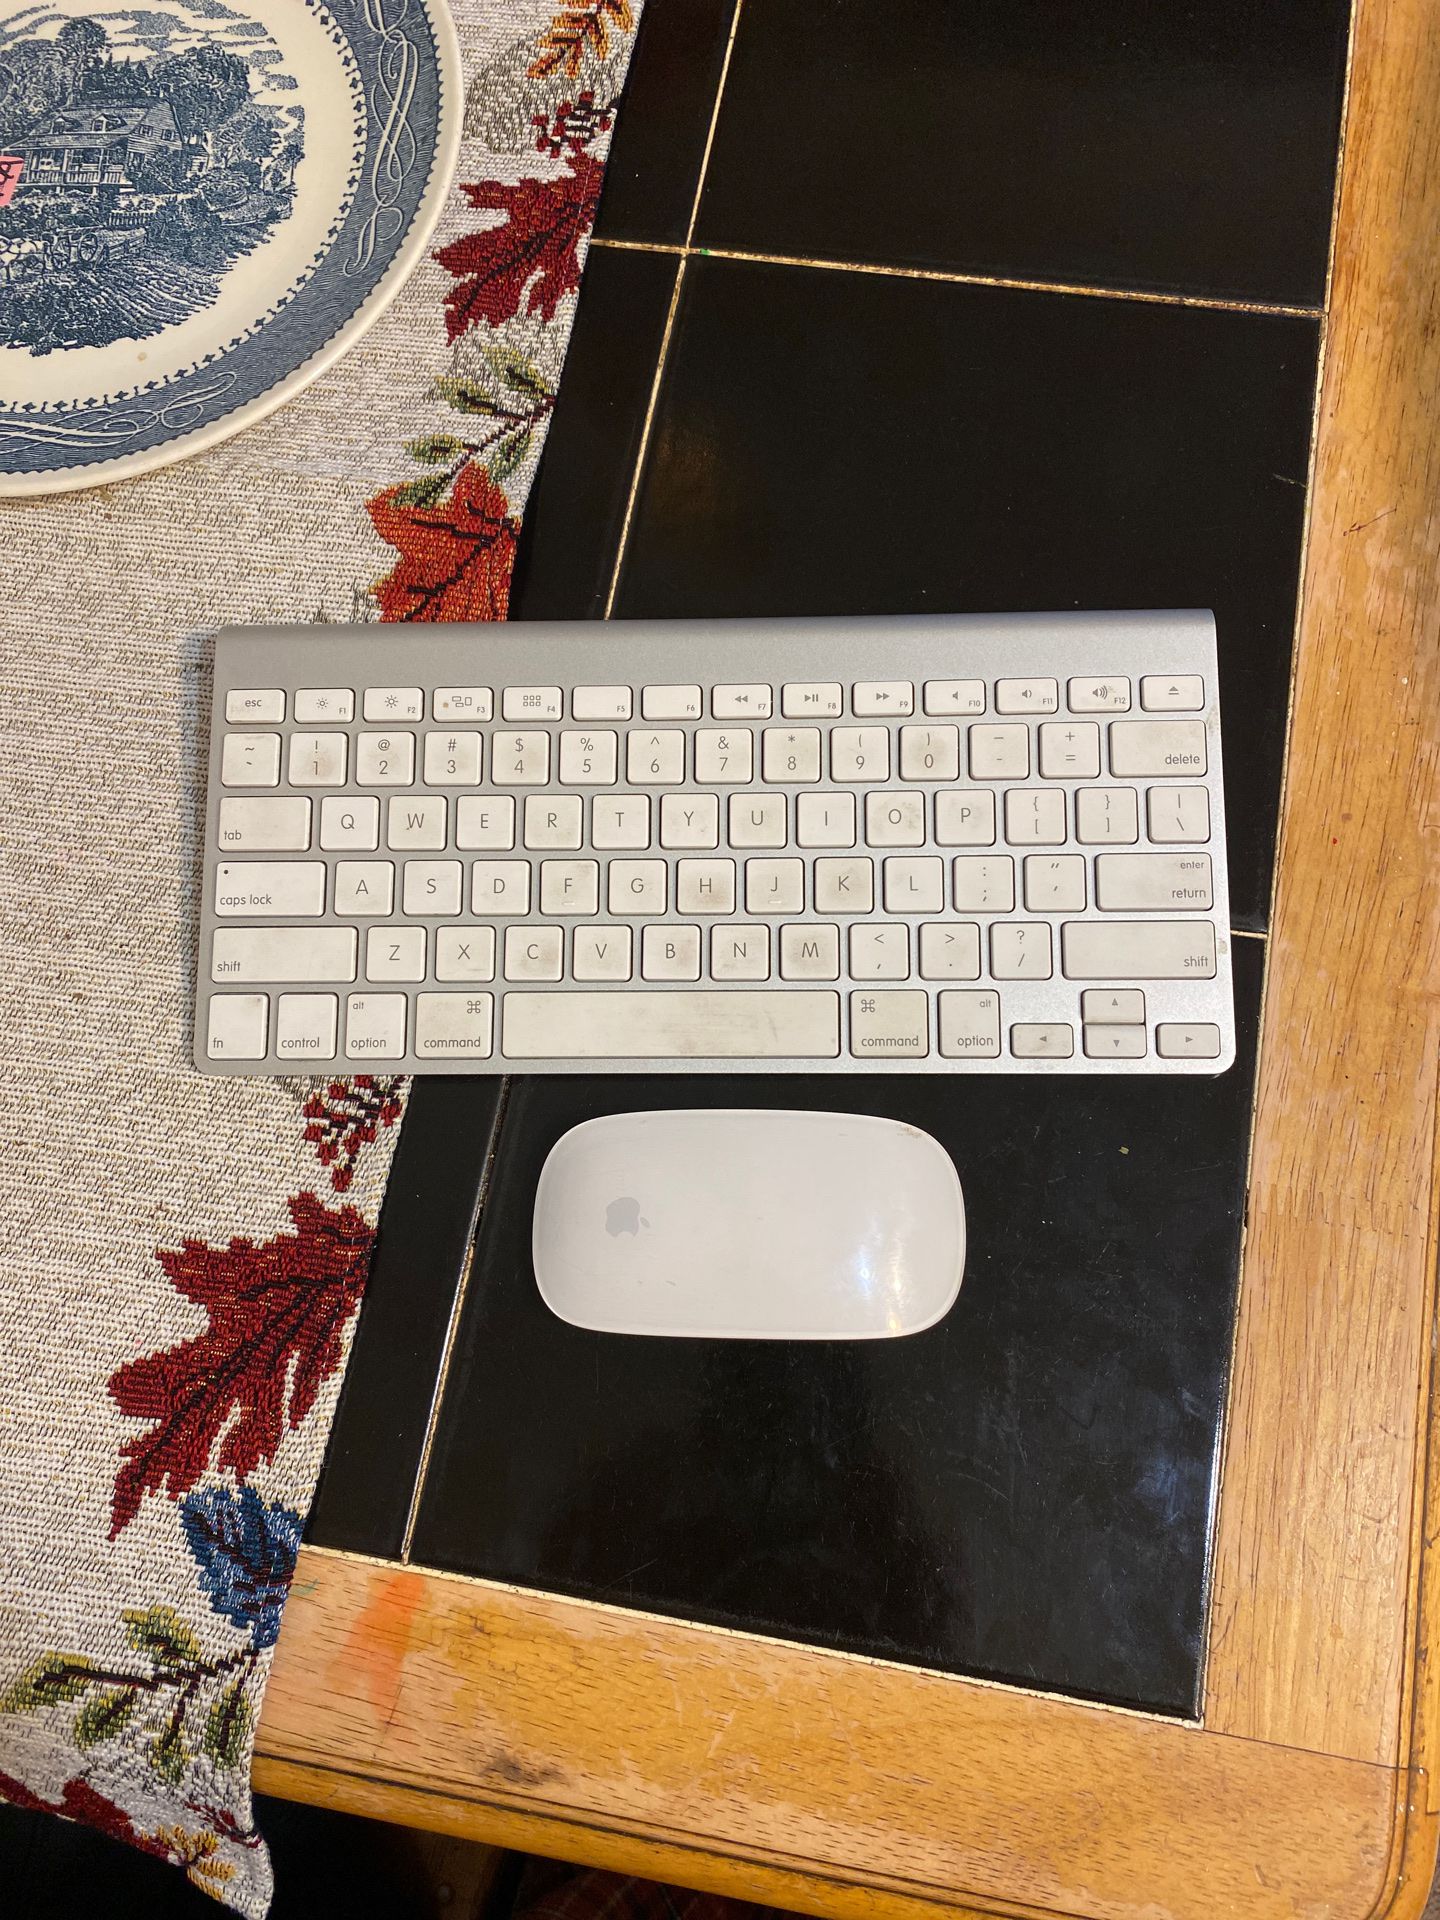 Apple wireless keyboard and wireless mouse